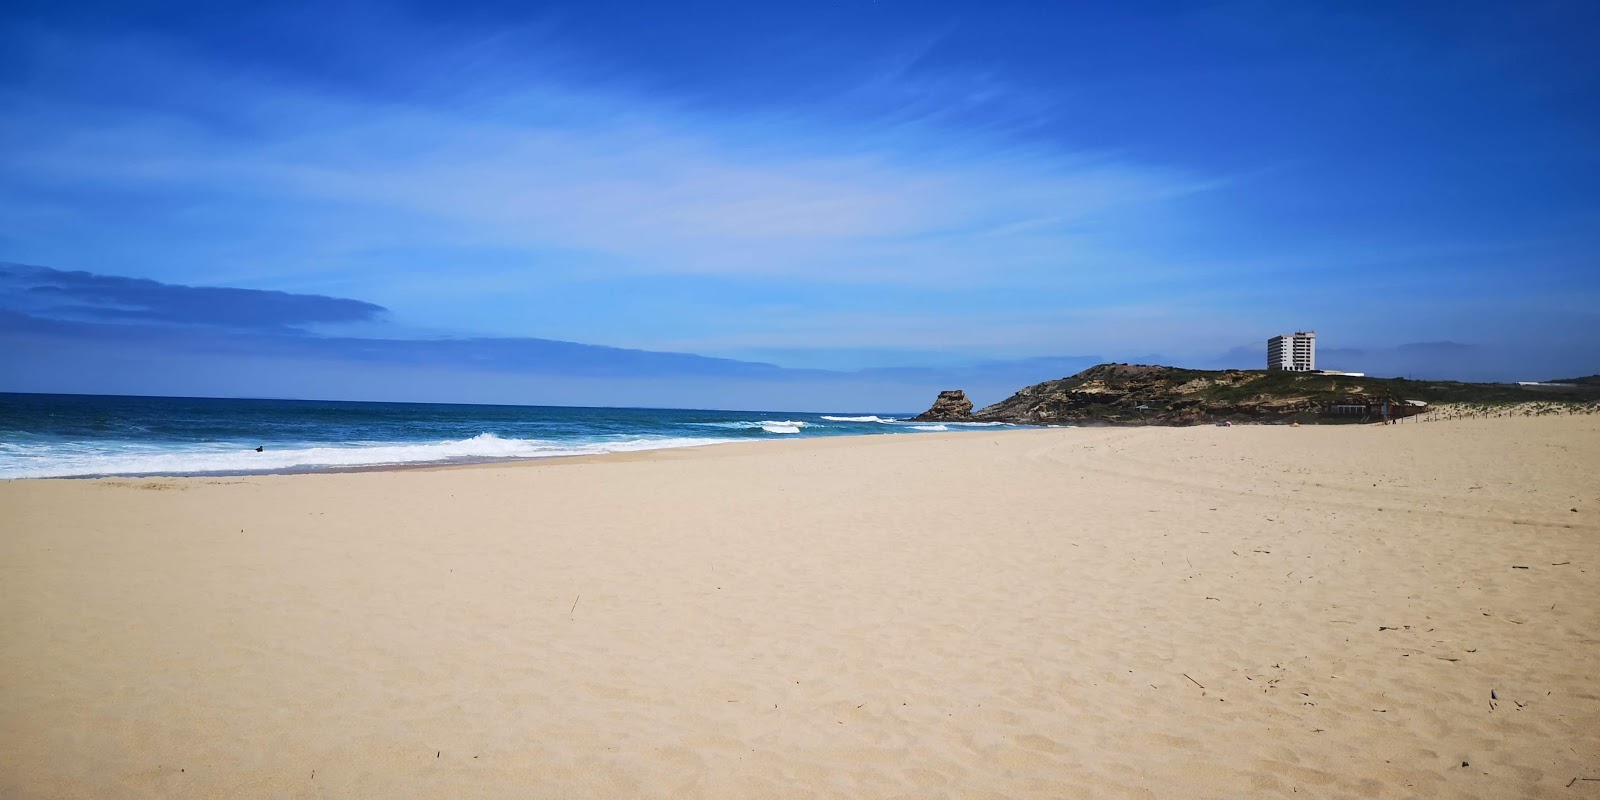 Photo of Praia de Santa Rita with turquoise water surface